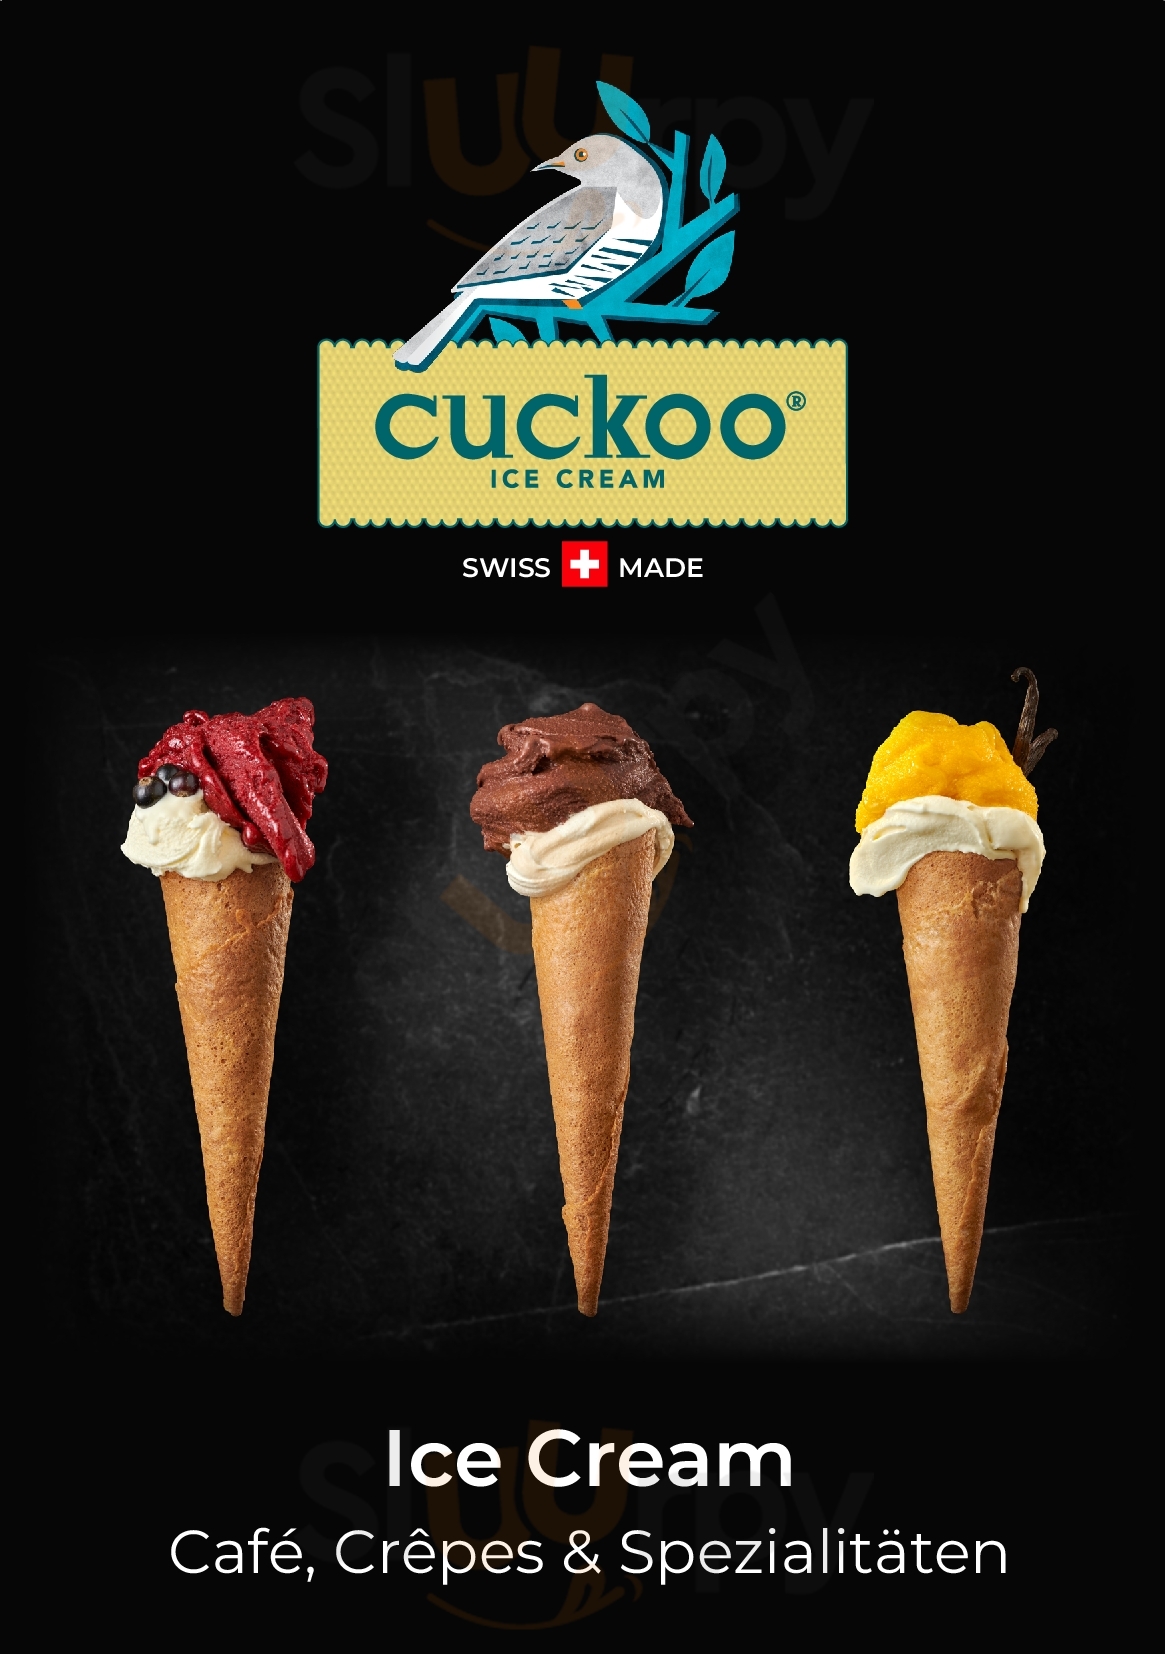 Cuckoo Ice Cream Bern Bern Menu - 1